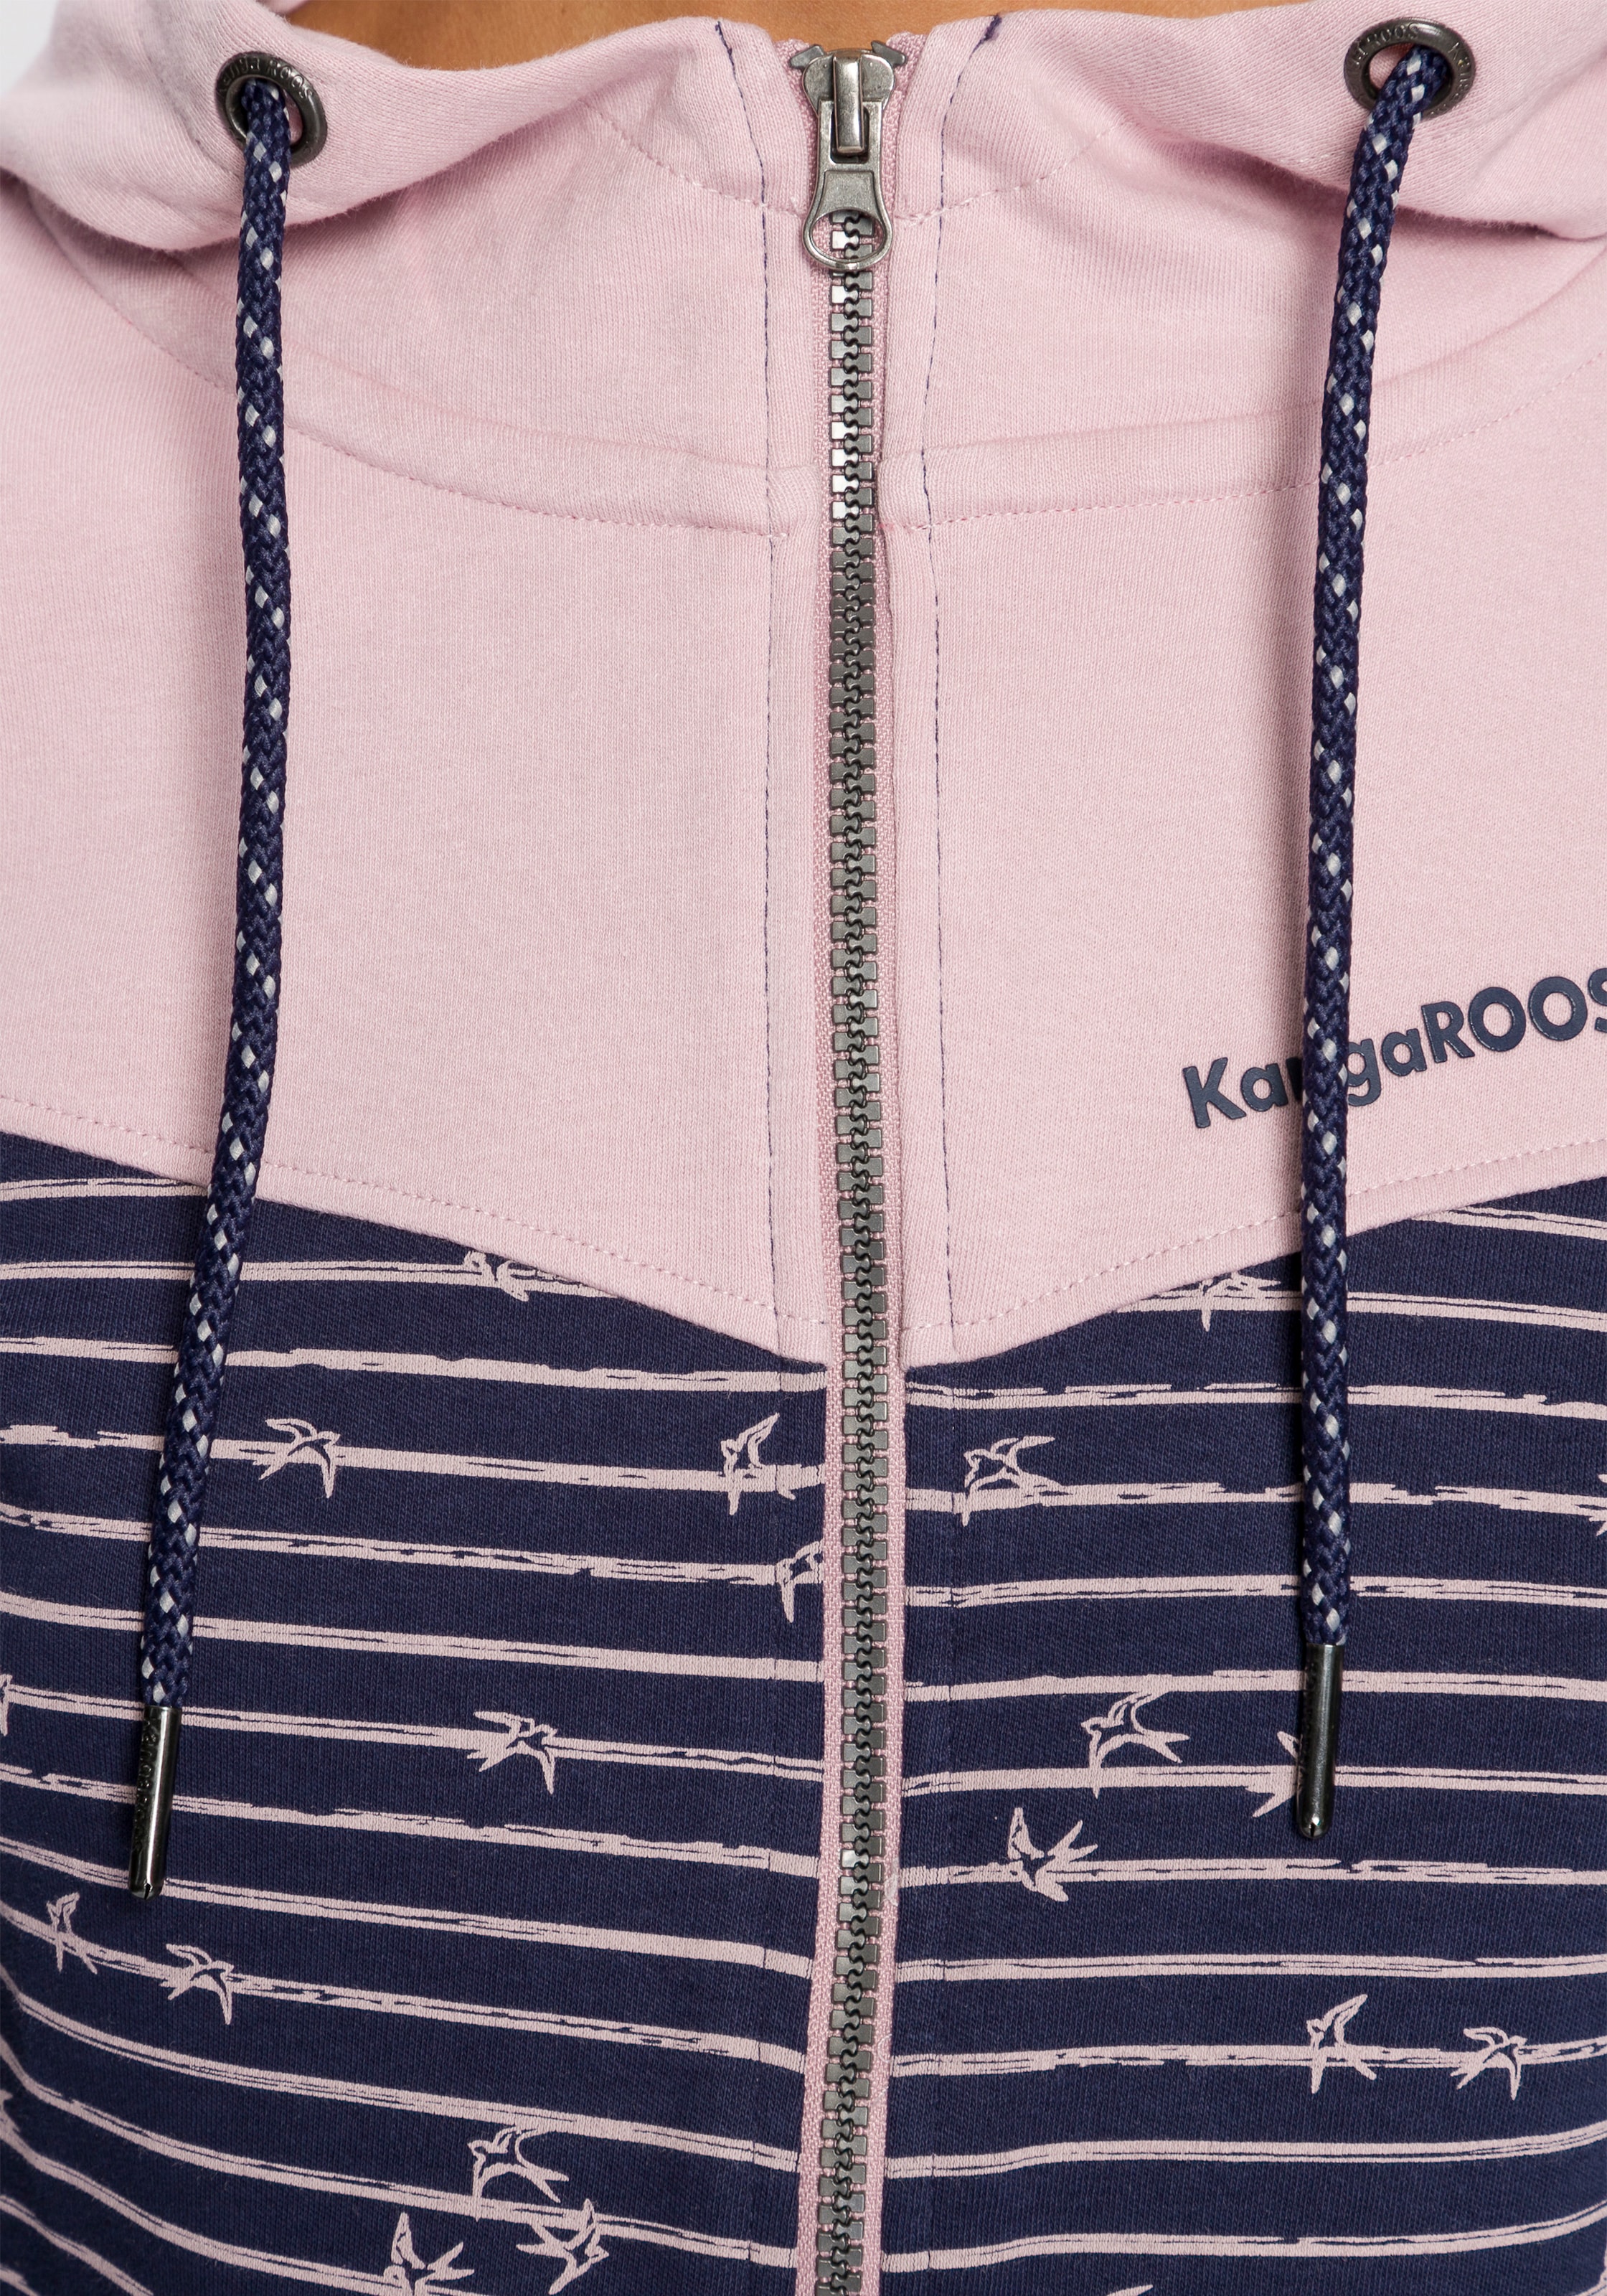 KangaROOS Kapuzensweatjacke, mit Colourblocking versandkostenfrei auf im Uni-Alloverdruck-Mix